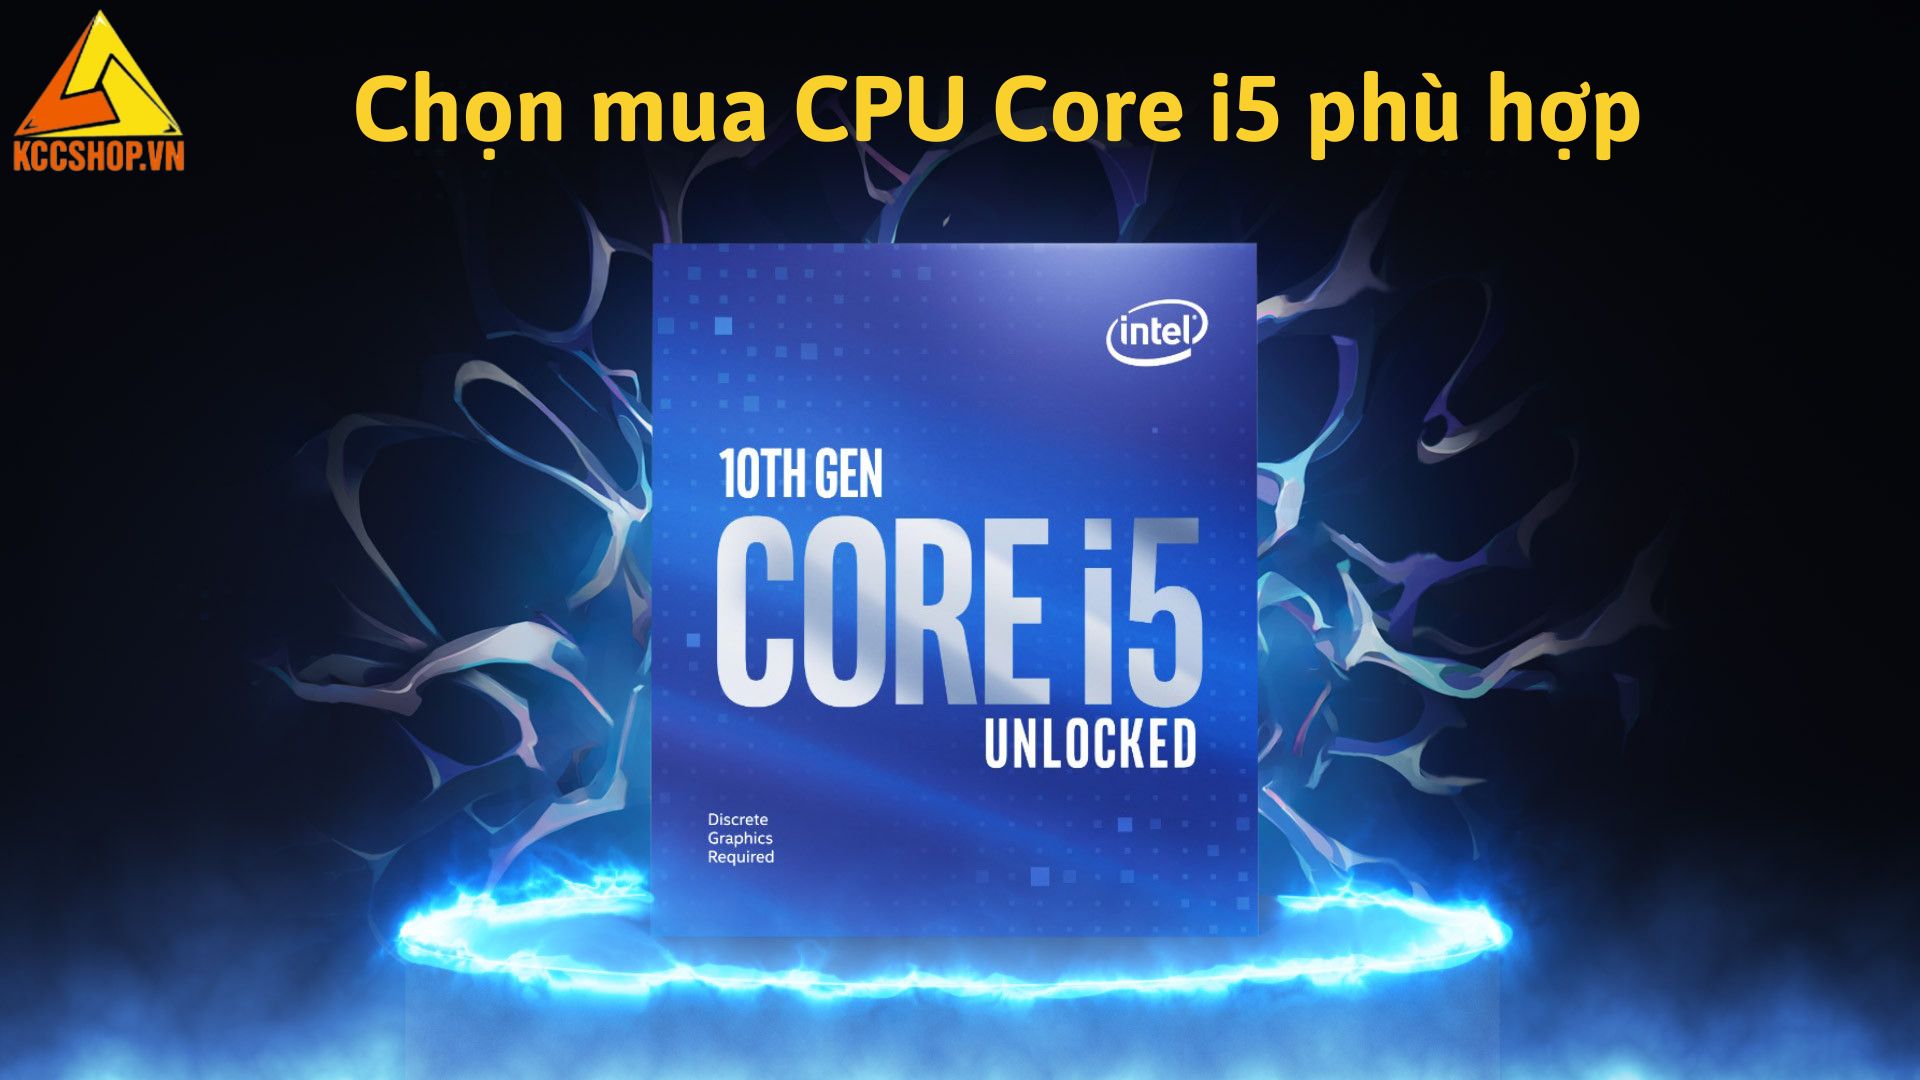 Chọn mua CPU Core i5 phù hợp